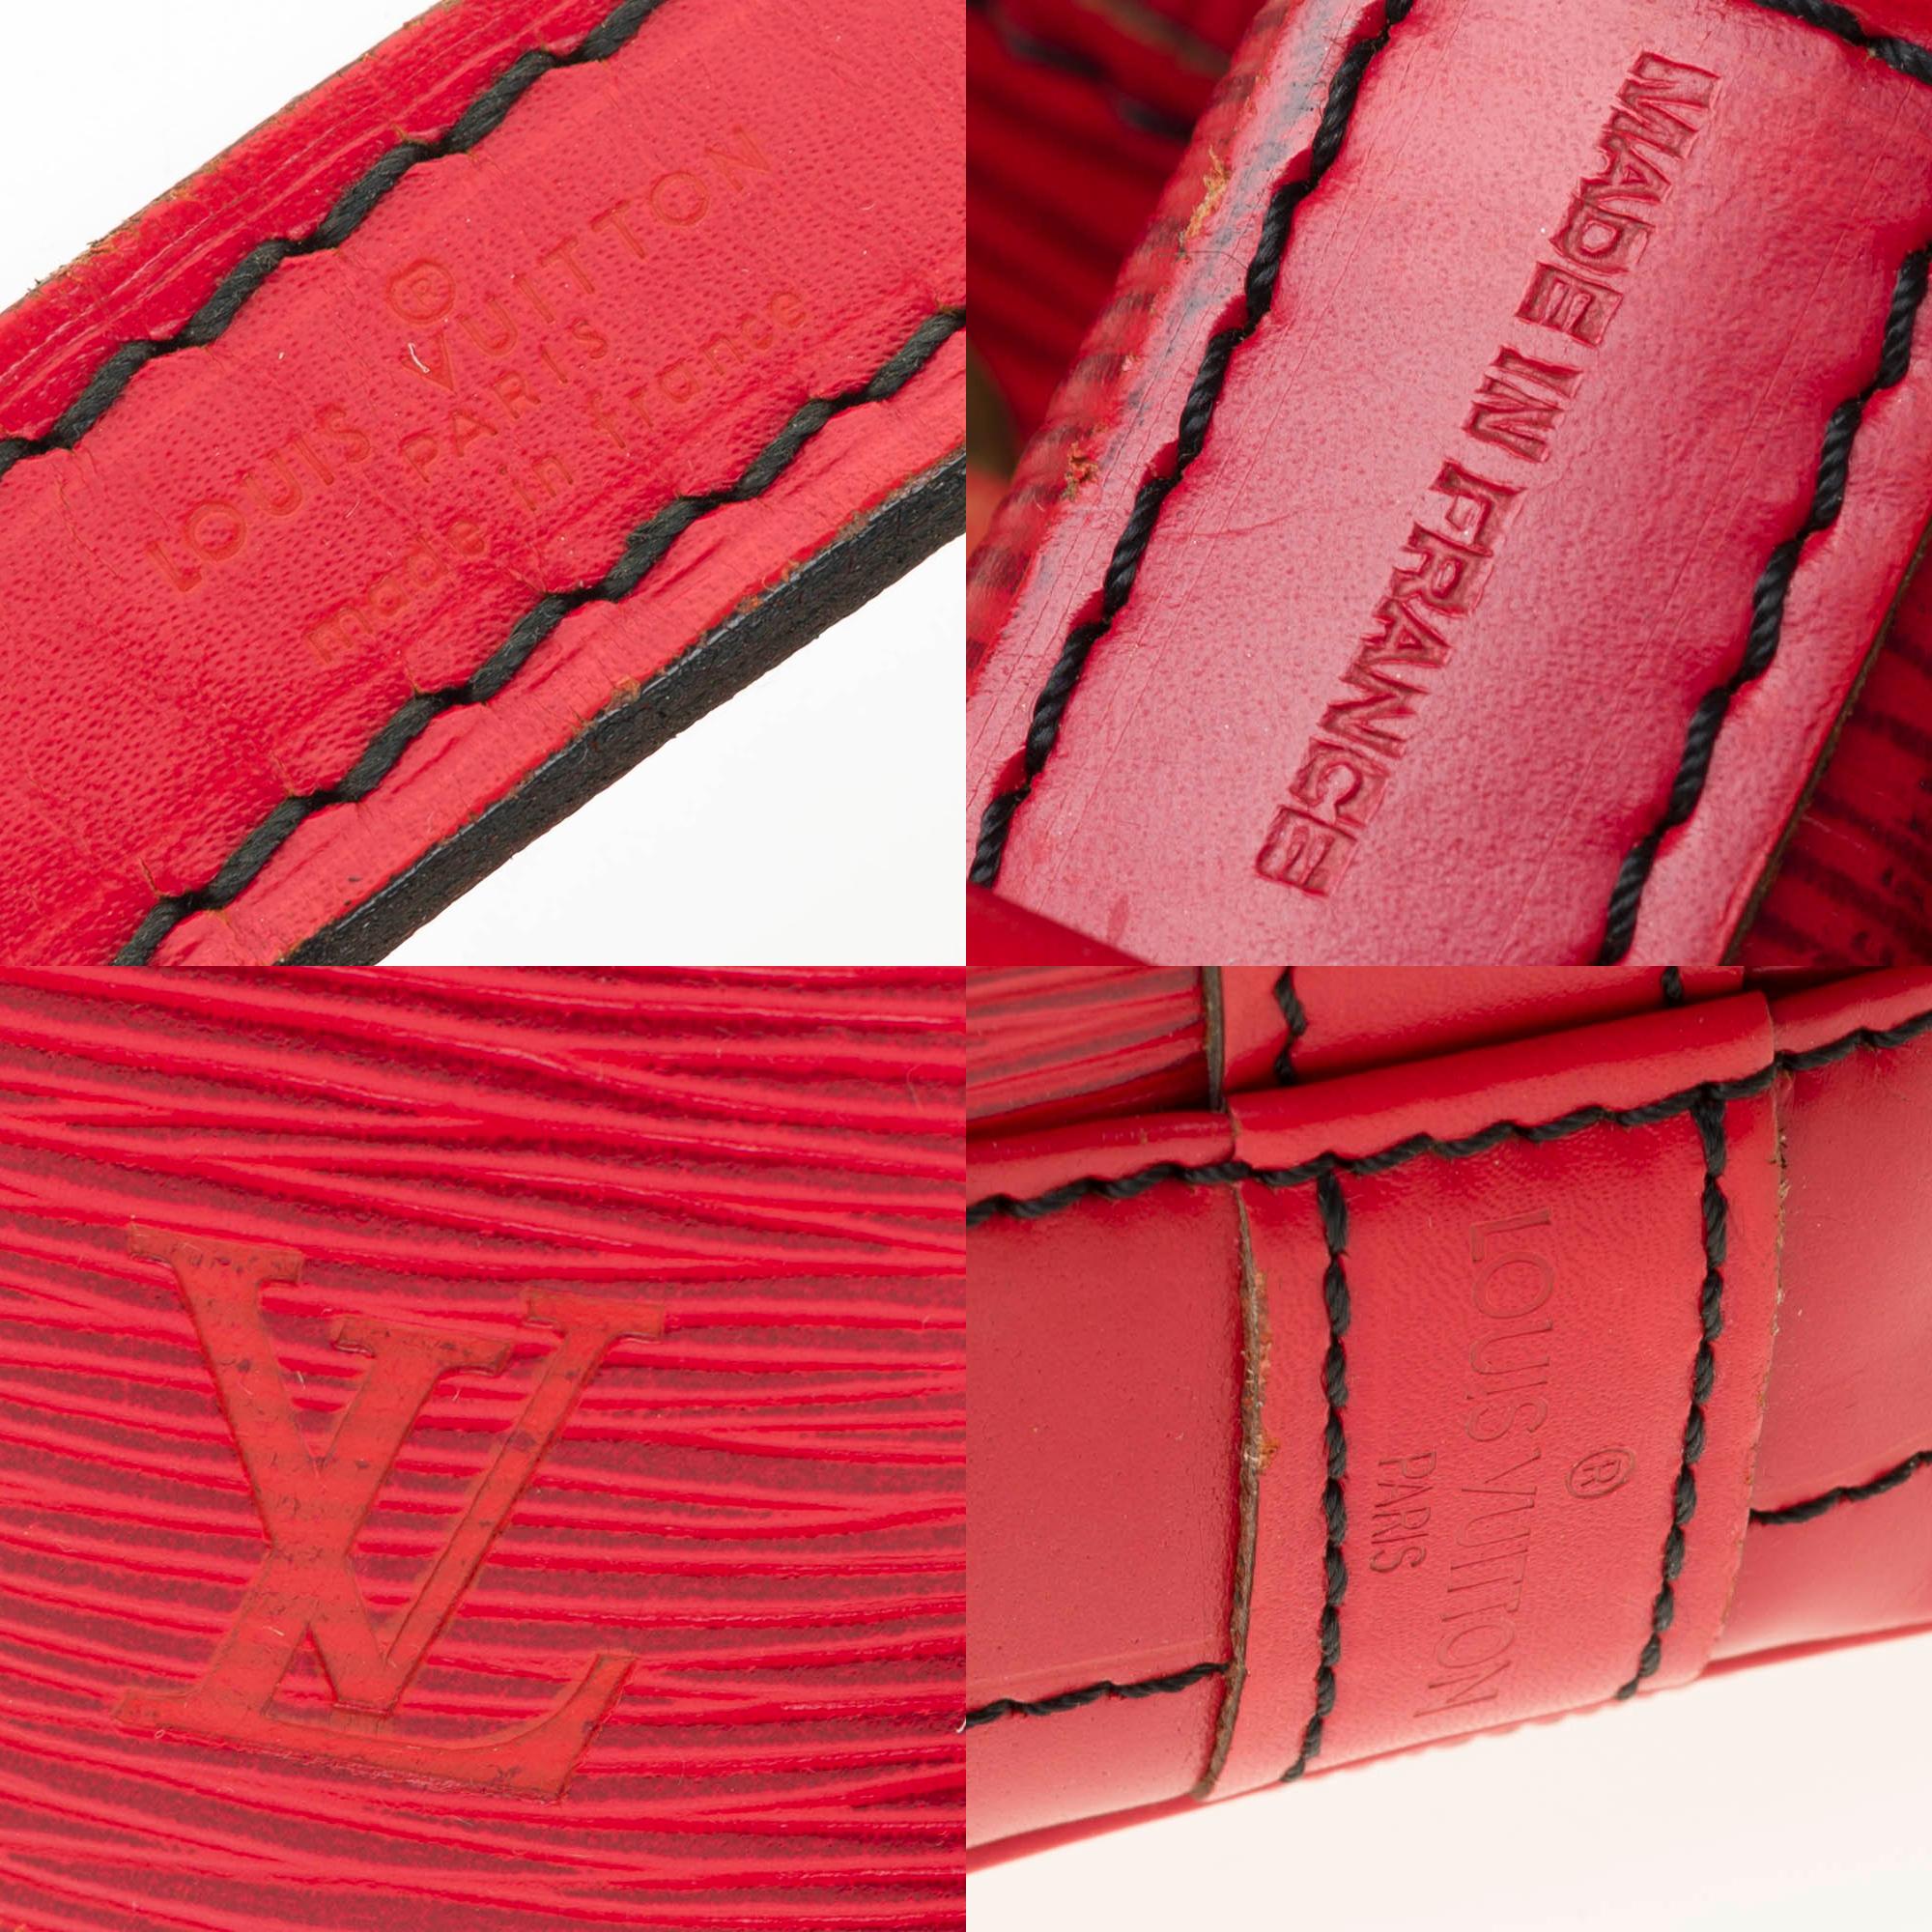 Women's Louis Vuitton Noé Grand modele shoulder bag in red epi leather, gold hardware